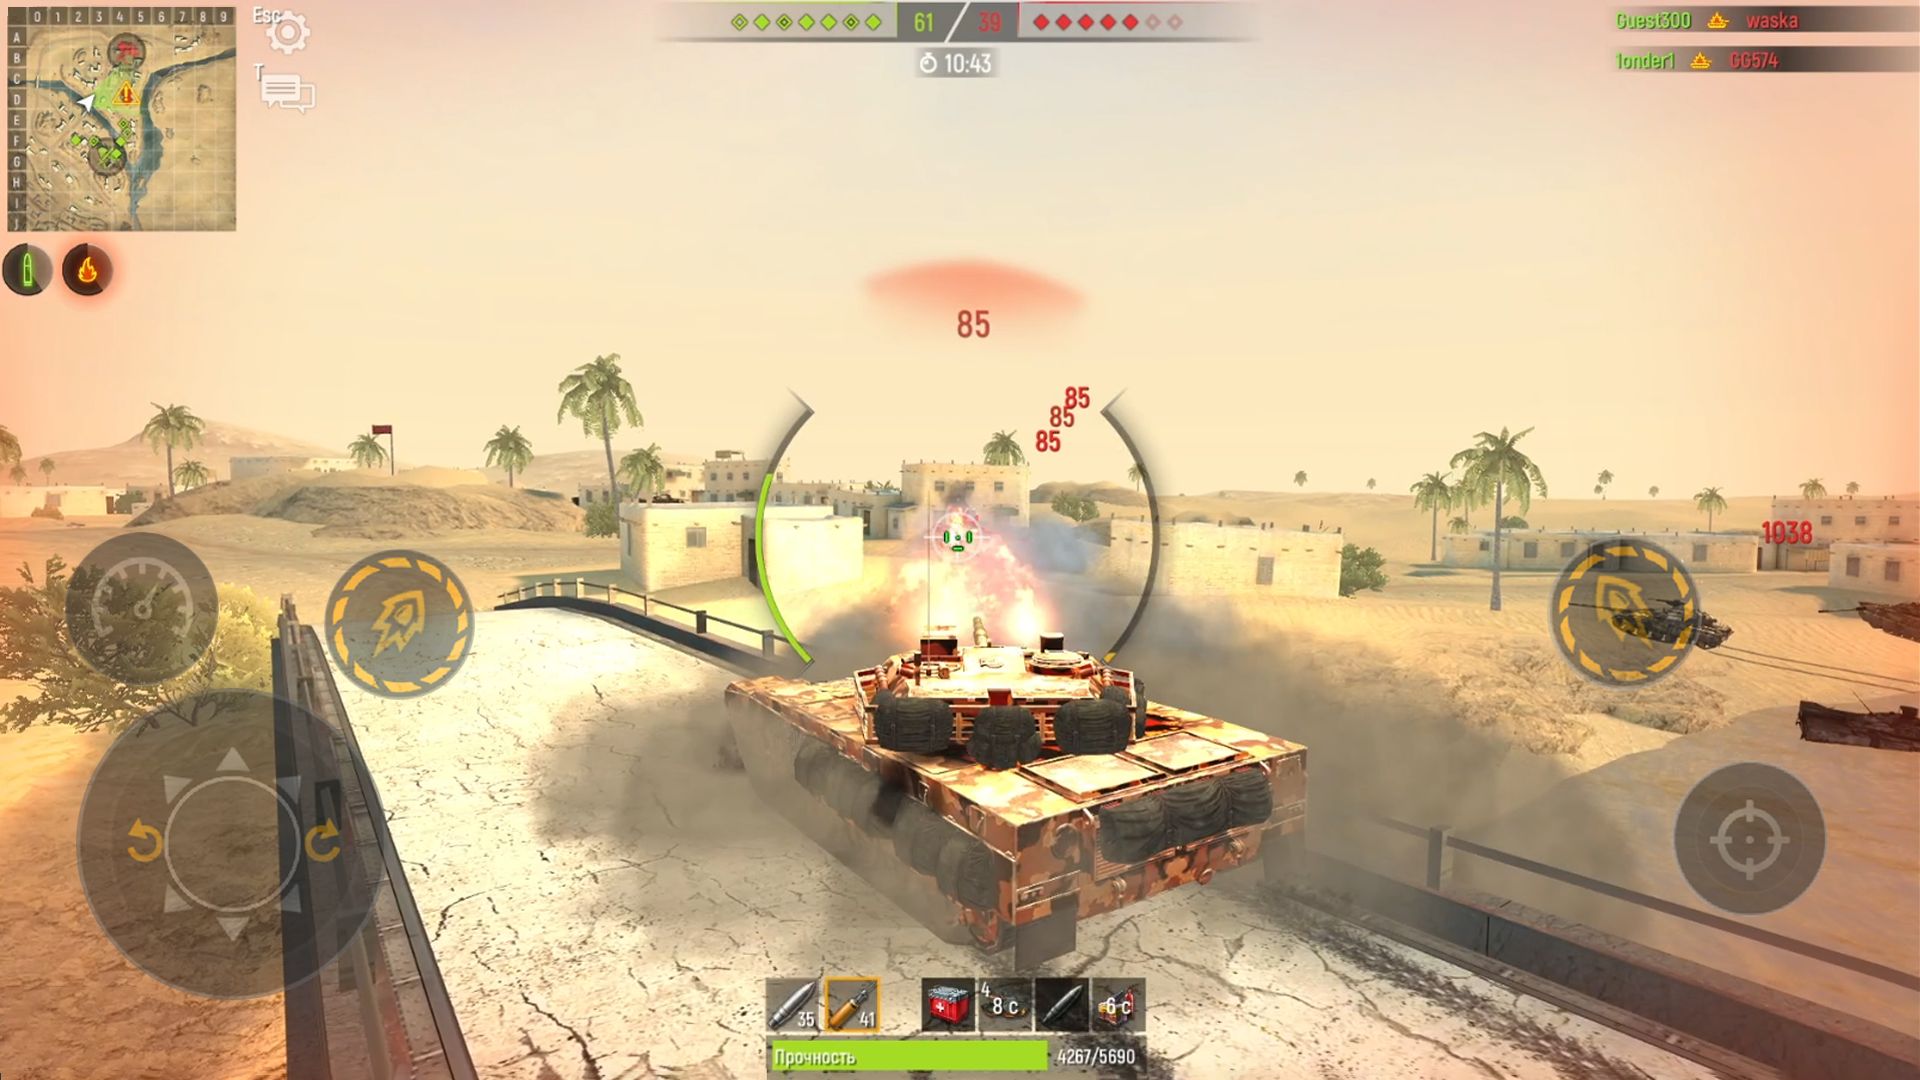 Baixar Military Tanks: Tank Battle para Android grátis.